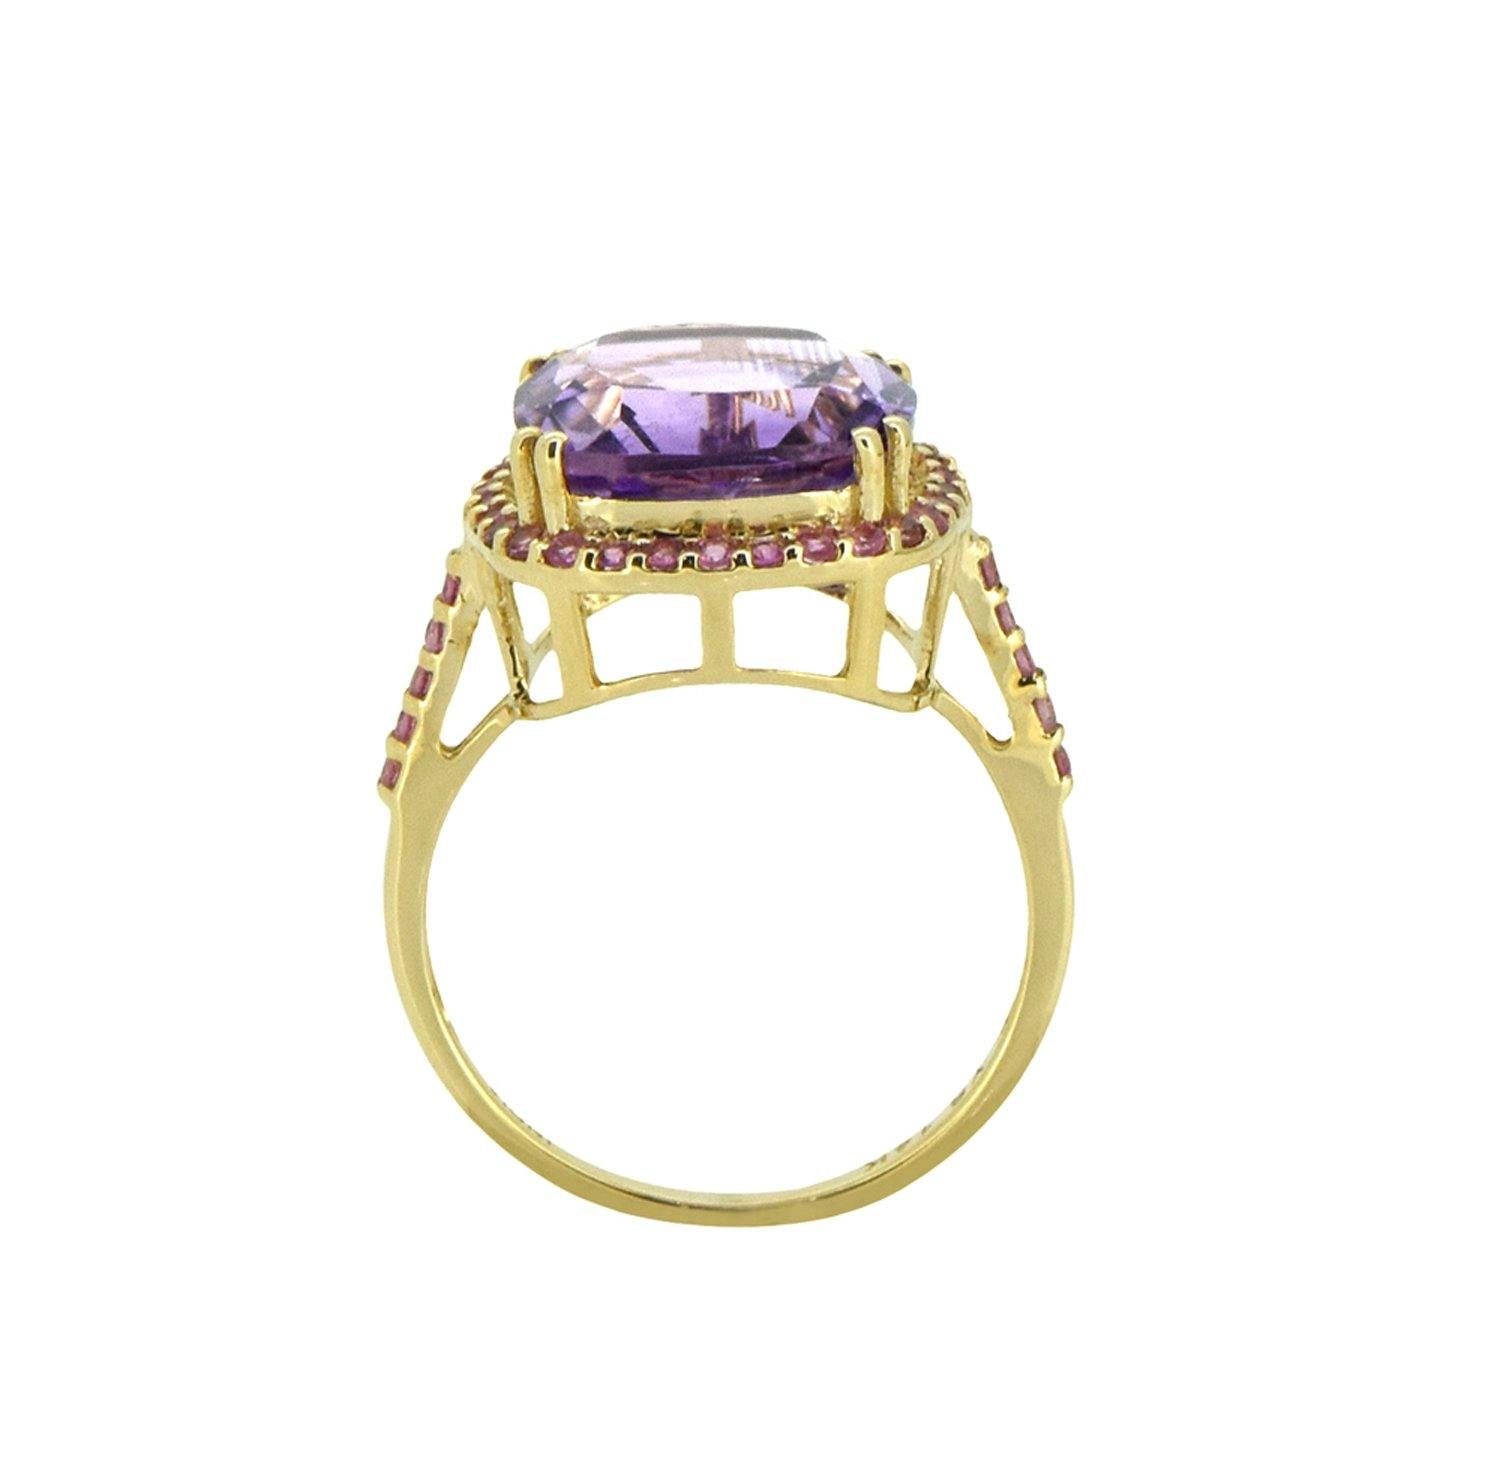 6.98 Ct. Amethyst Pink Tourmaline Solid 14k Yellow Gold Ring Jewelry - YoTreasure